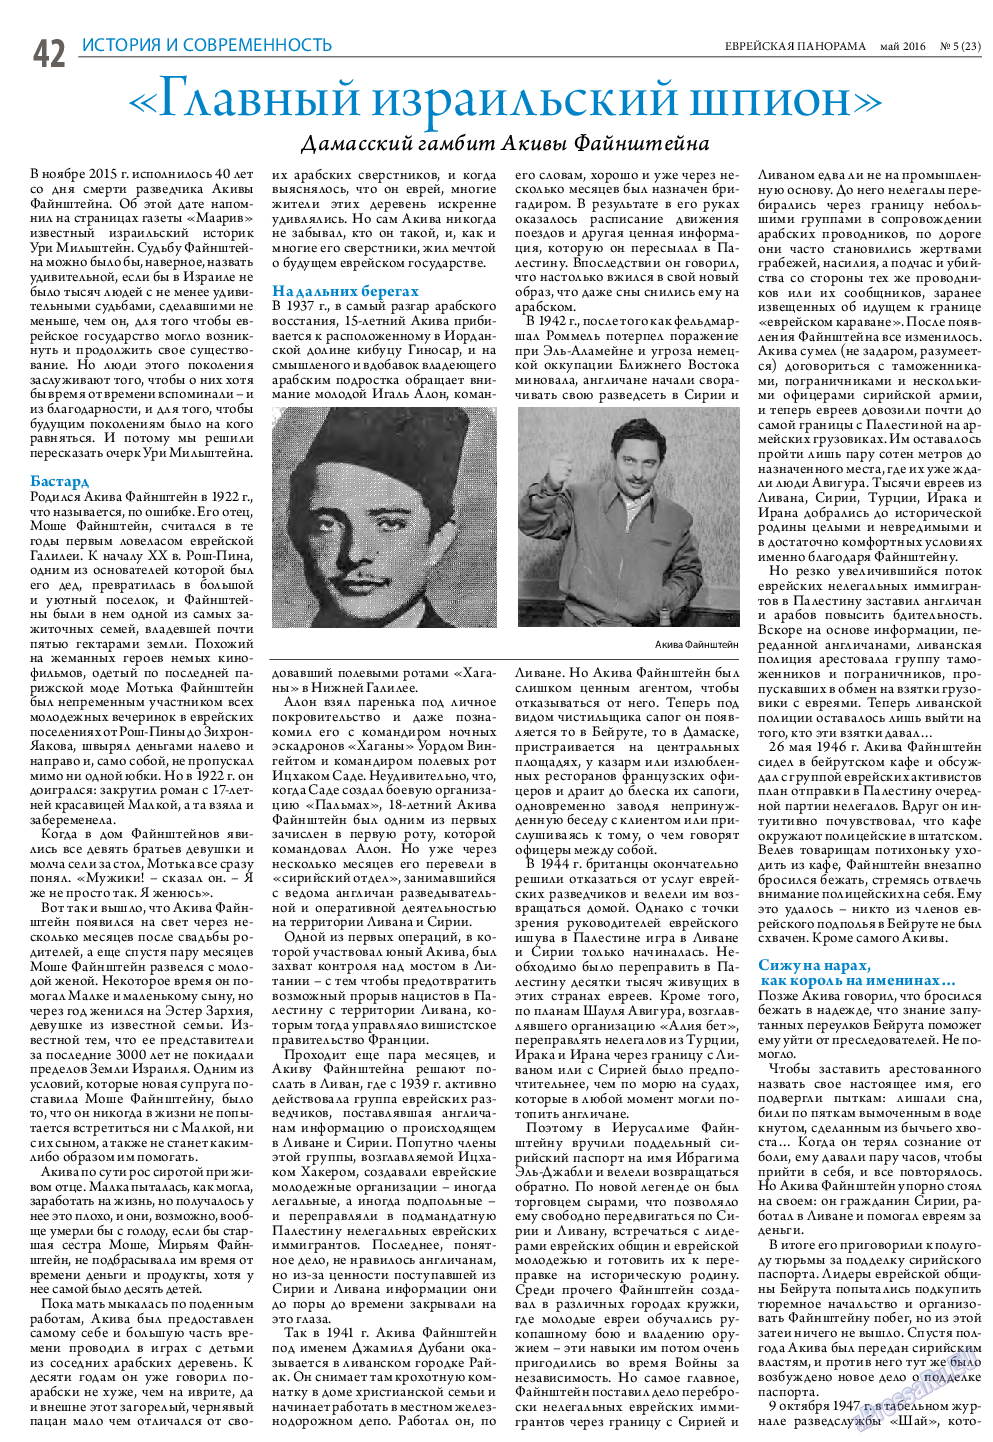 Еврейская панорама, газета. 2016 №5 стр.42